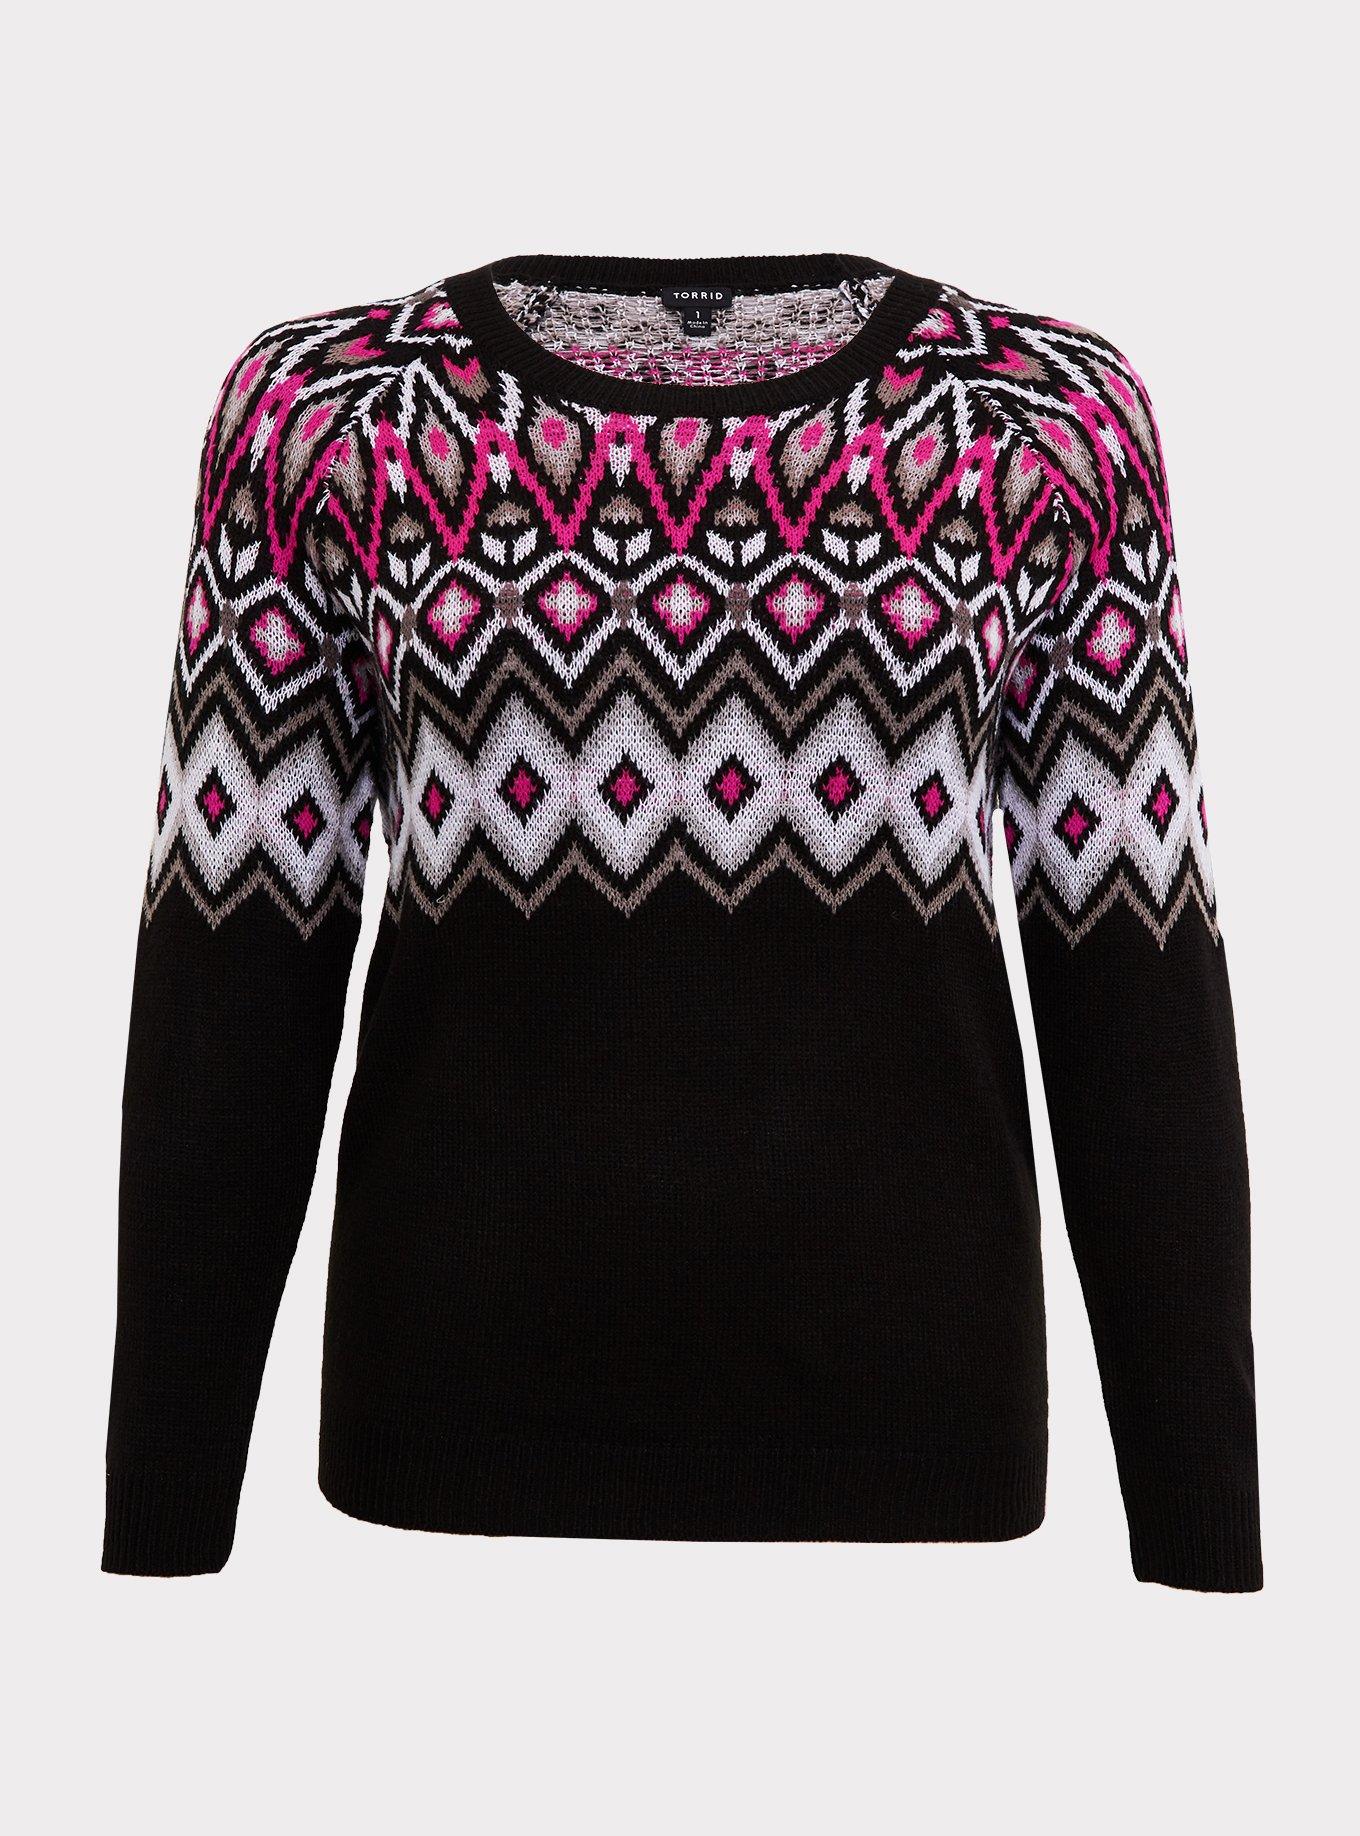 Plus Size - Black & Hot Pink Fair Isle Sweater - Torrid